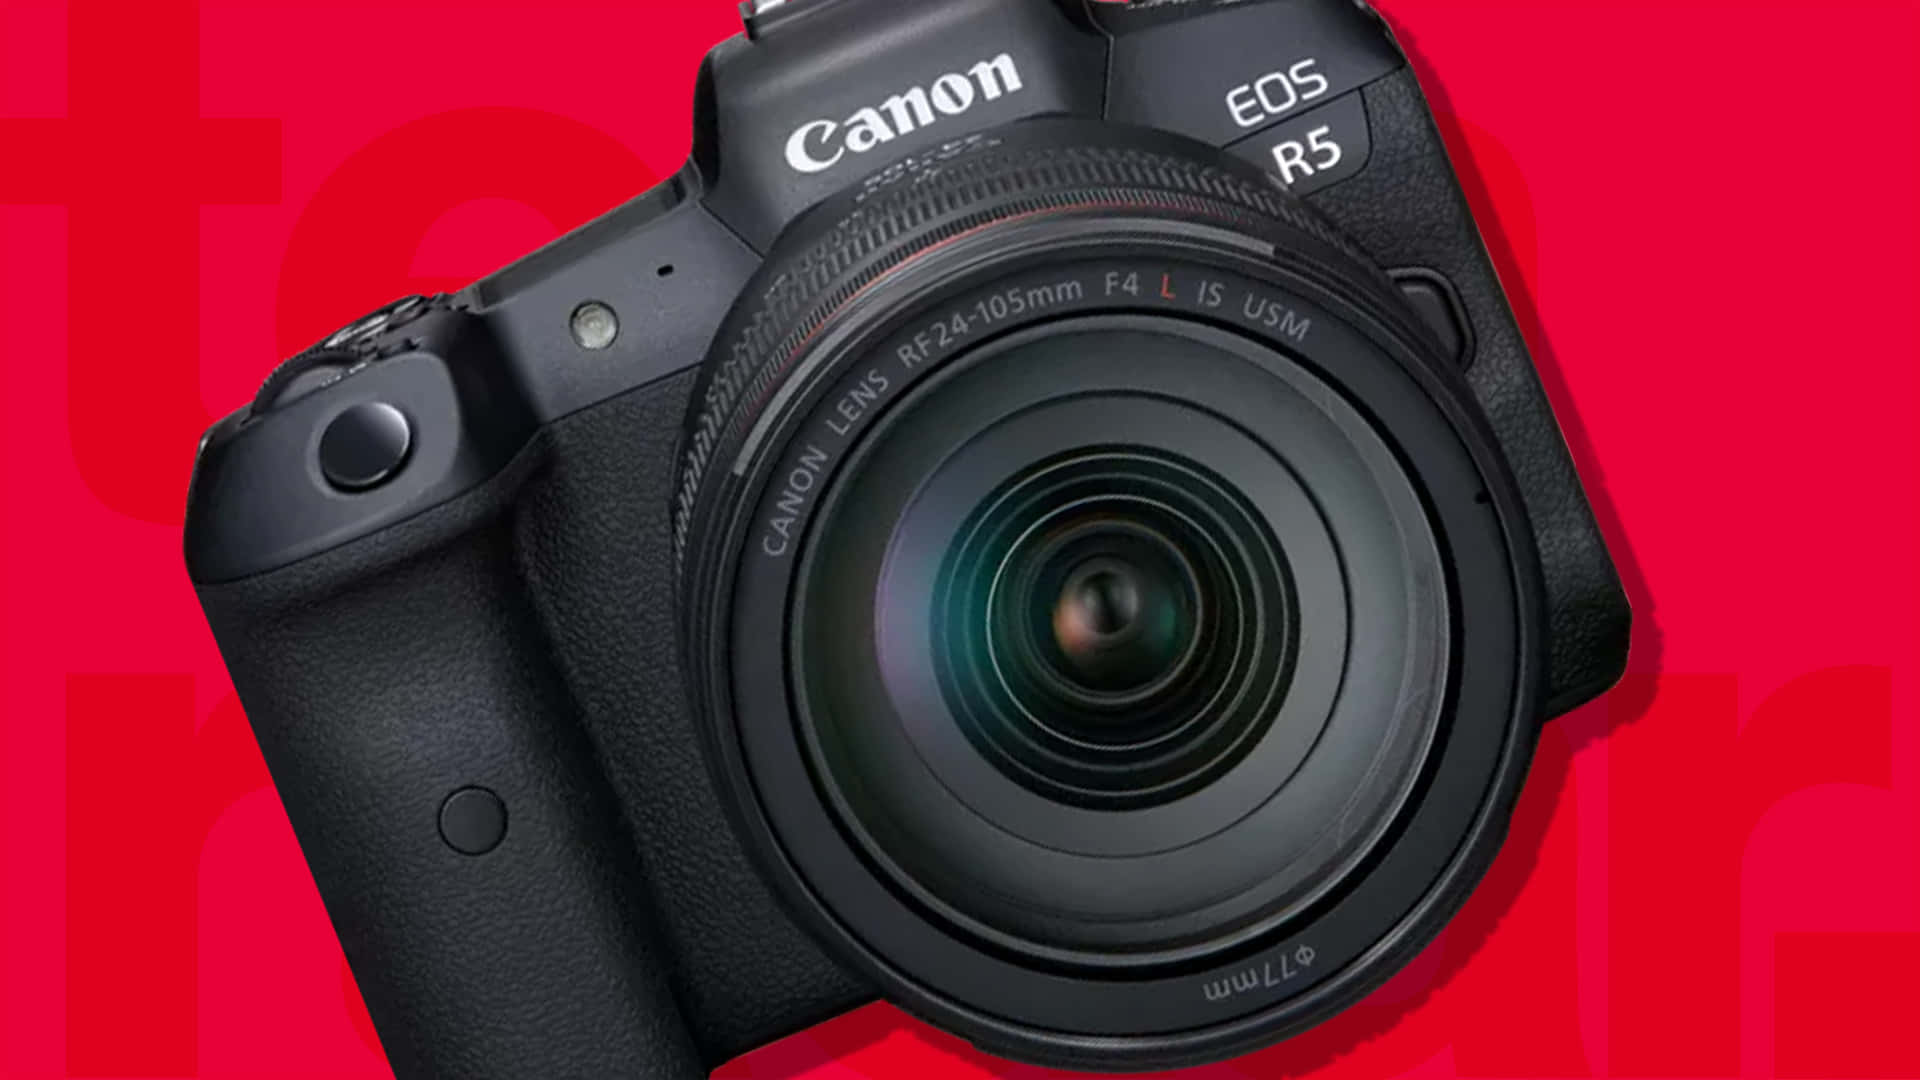 Canonr5 Kamera Mit Rotem Hintergrund